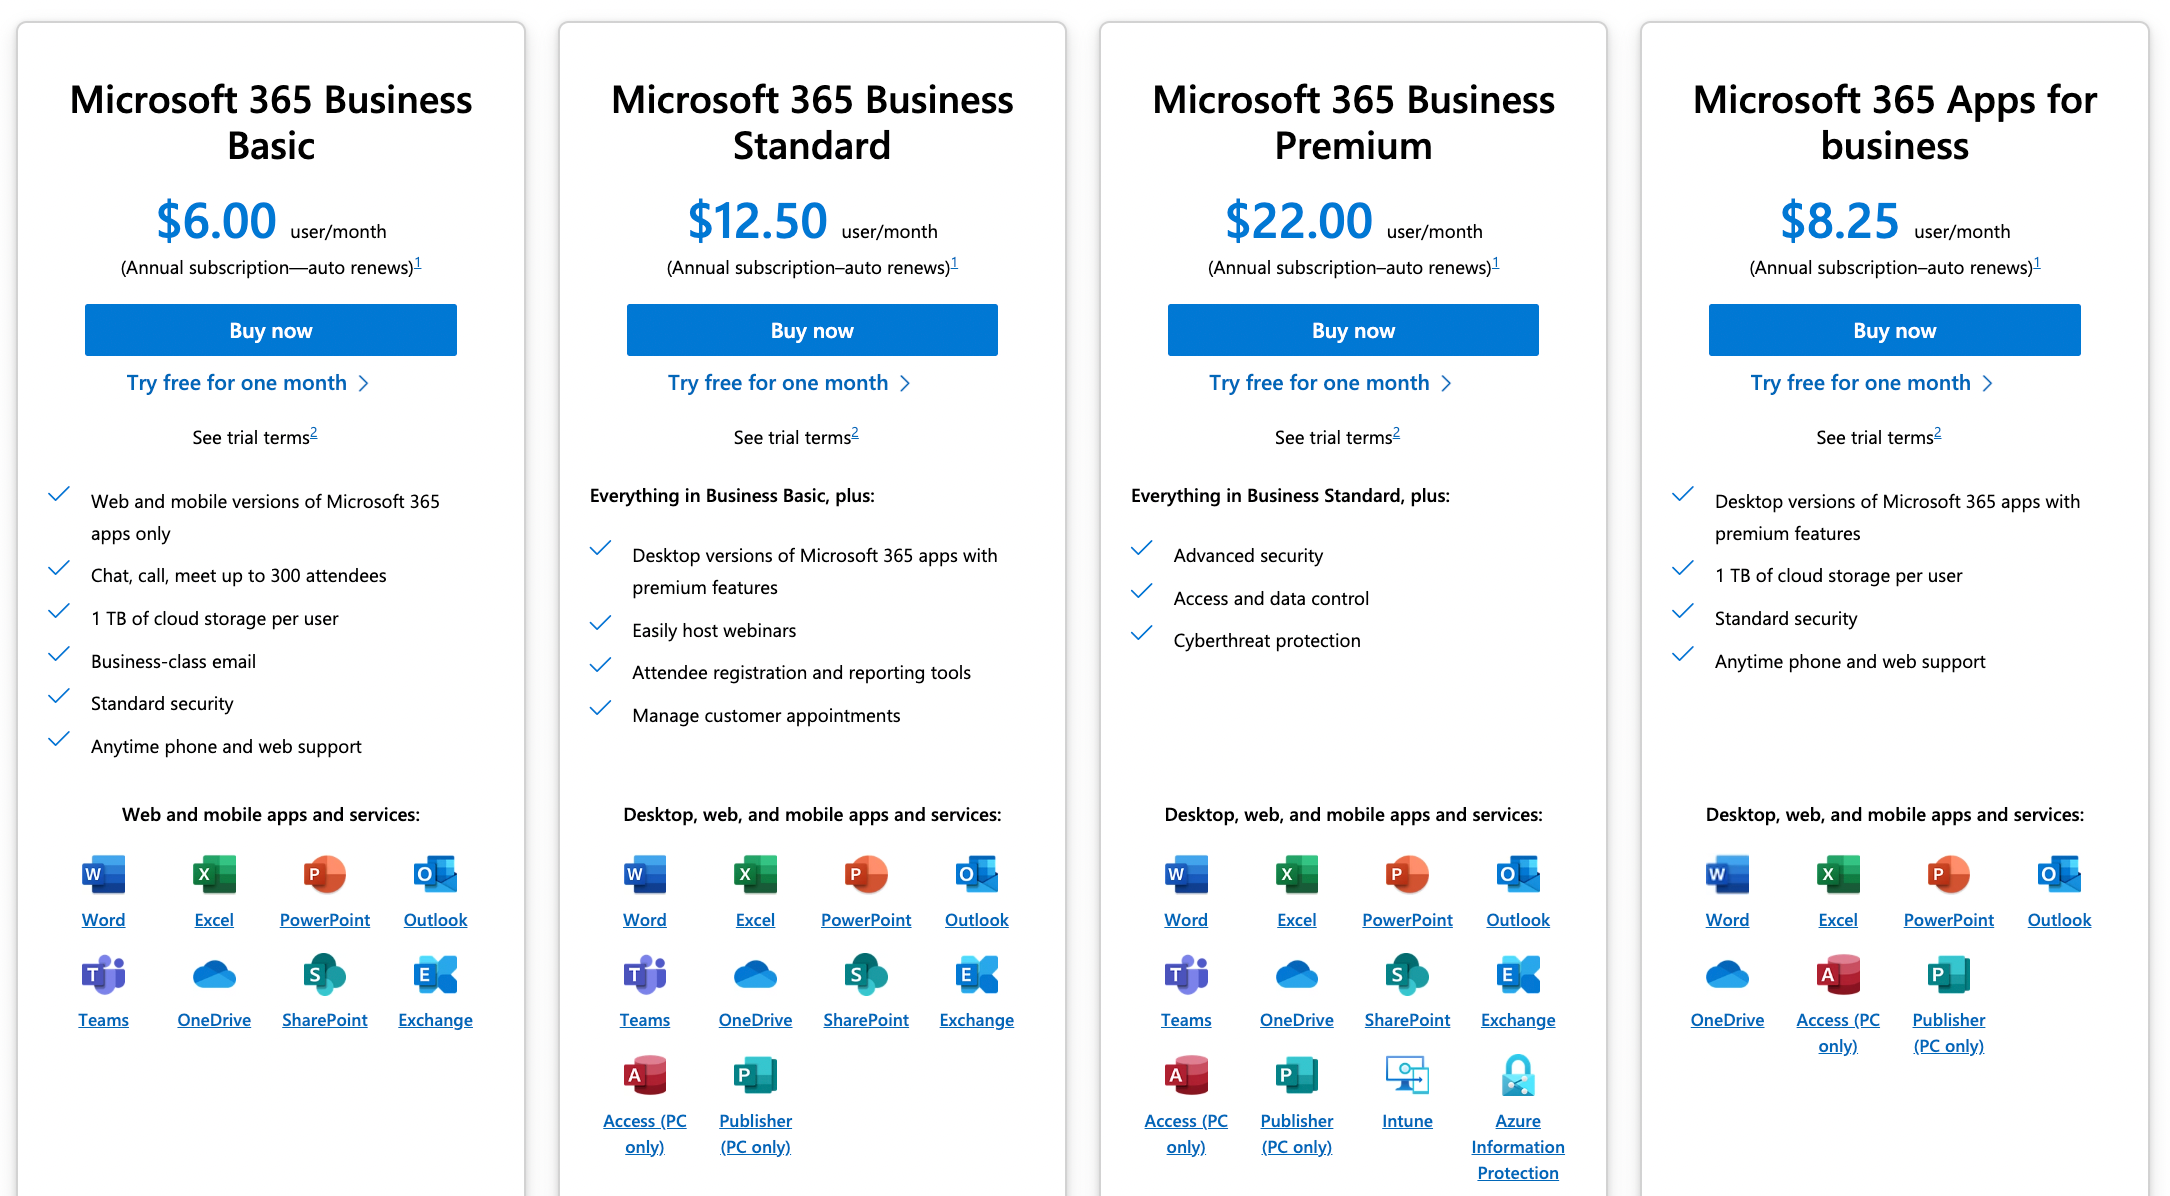 Pricing of Microsoft 365